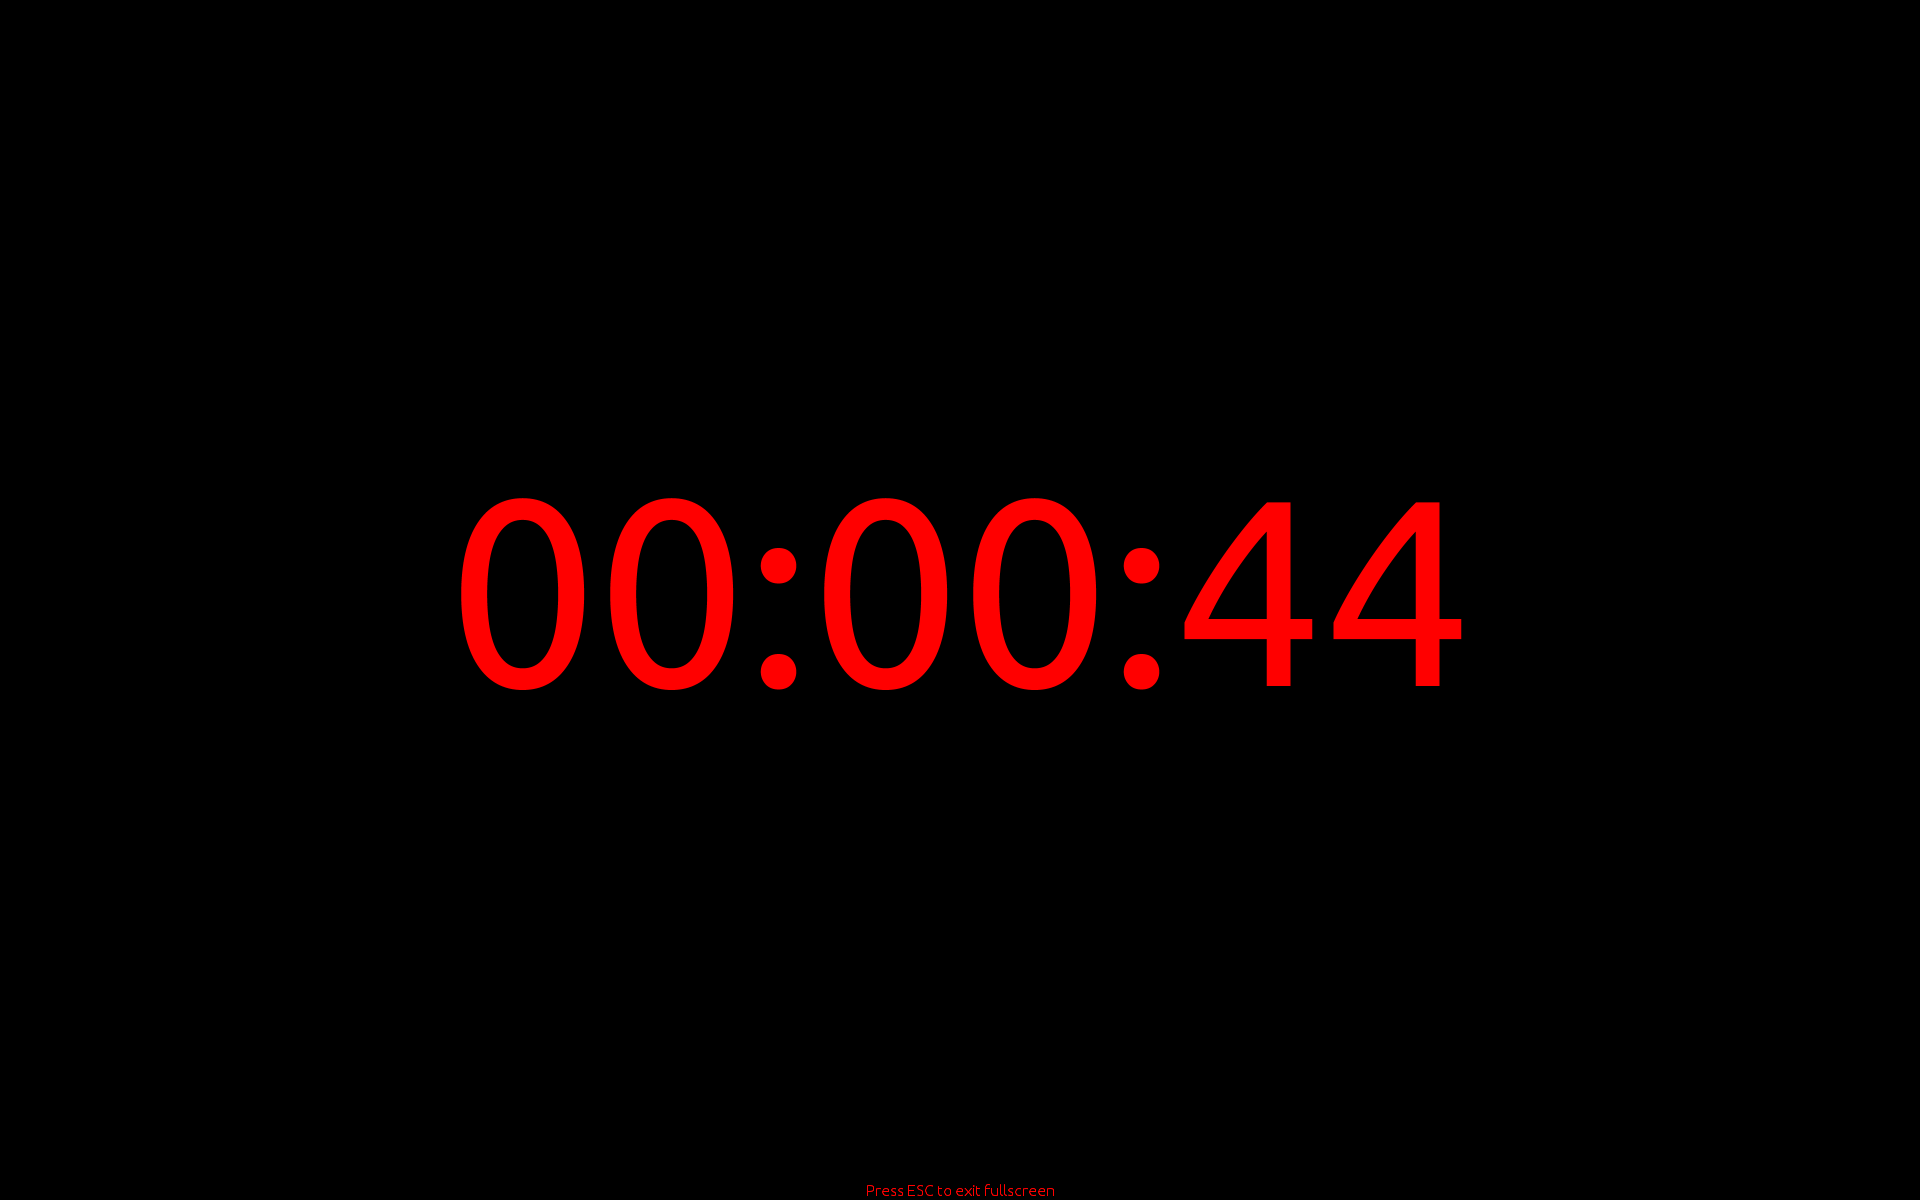 Able Countdown Clock For Desktop